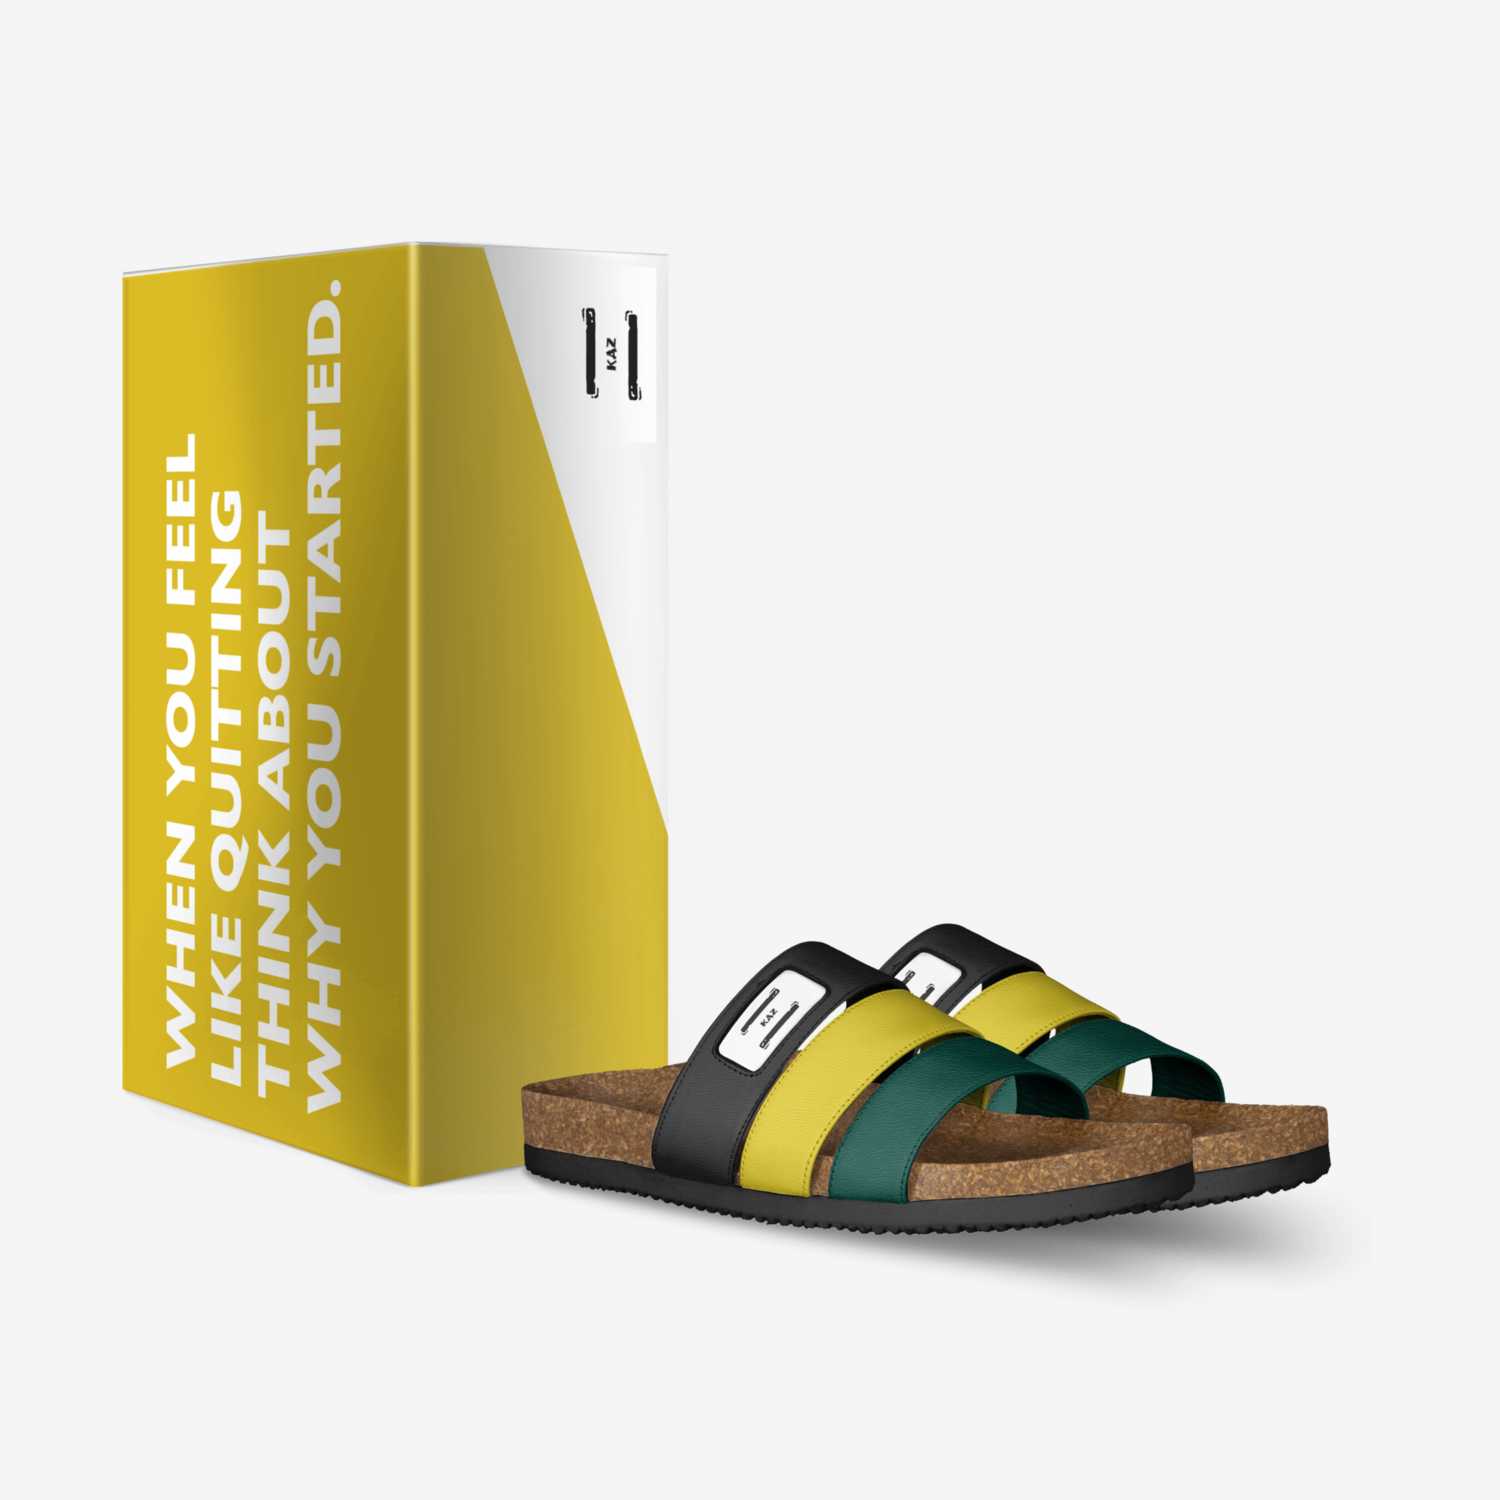 KAZ custom made in Italy shoes by Tania Preddie | Box view